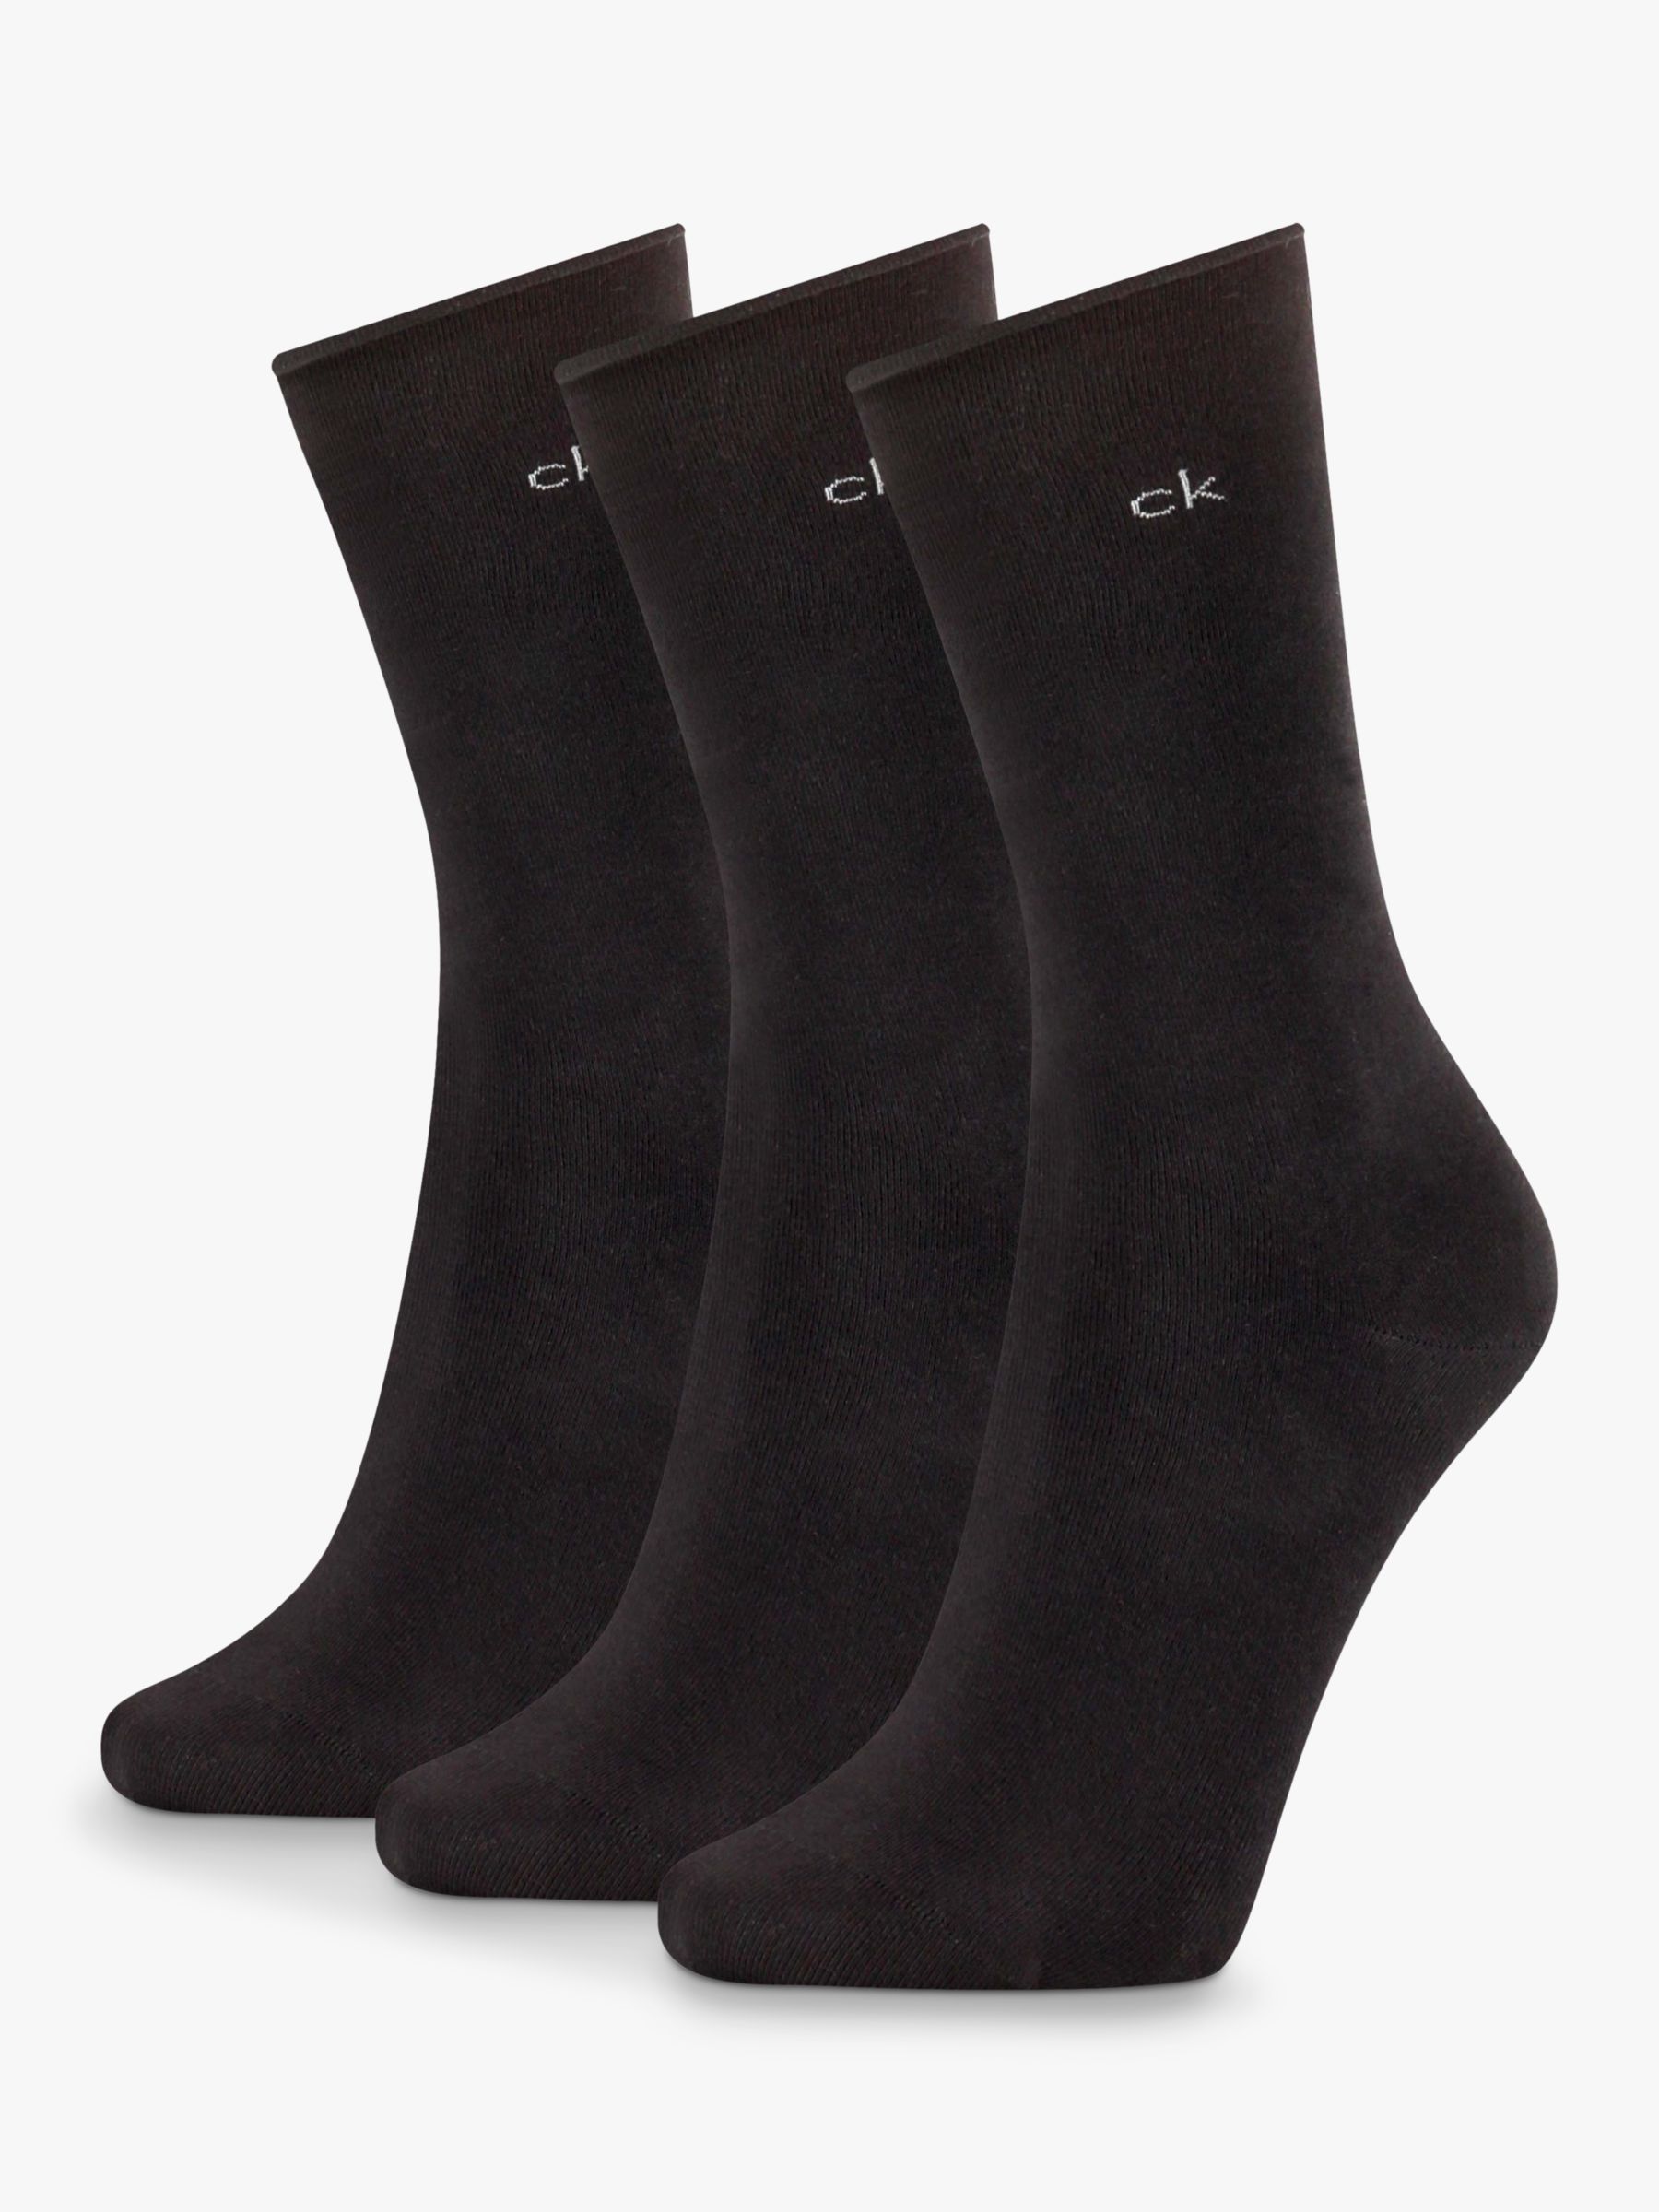 Calvin Klein Emma Roll Top Ankle Socks, Pack of 3, Black 001